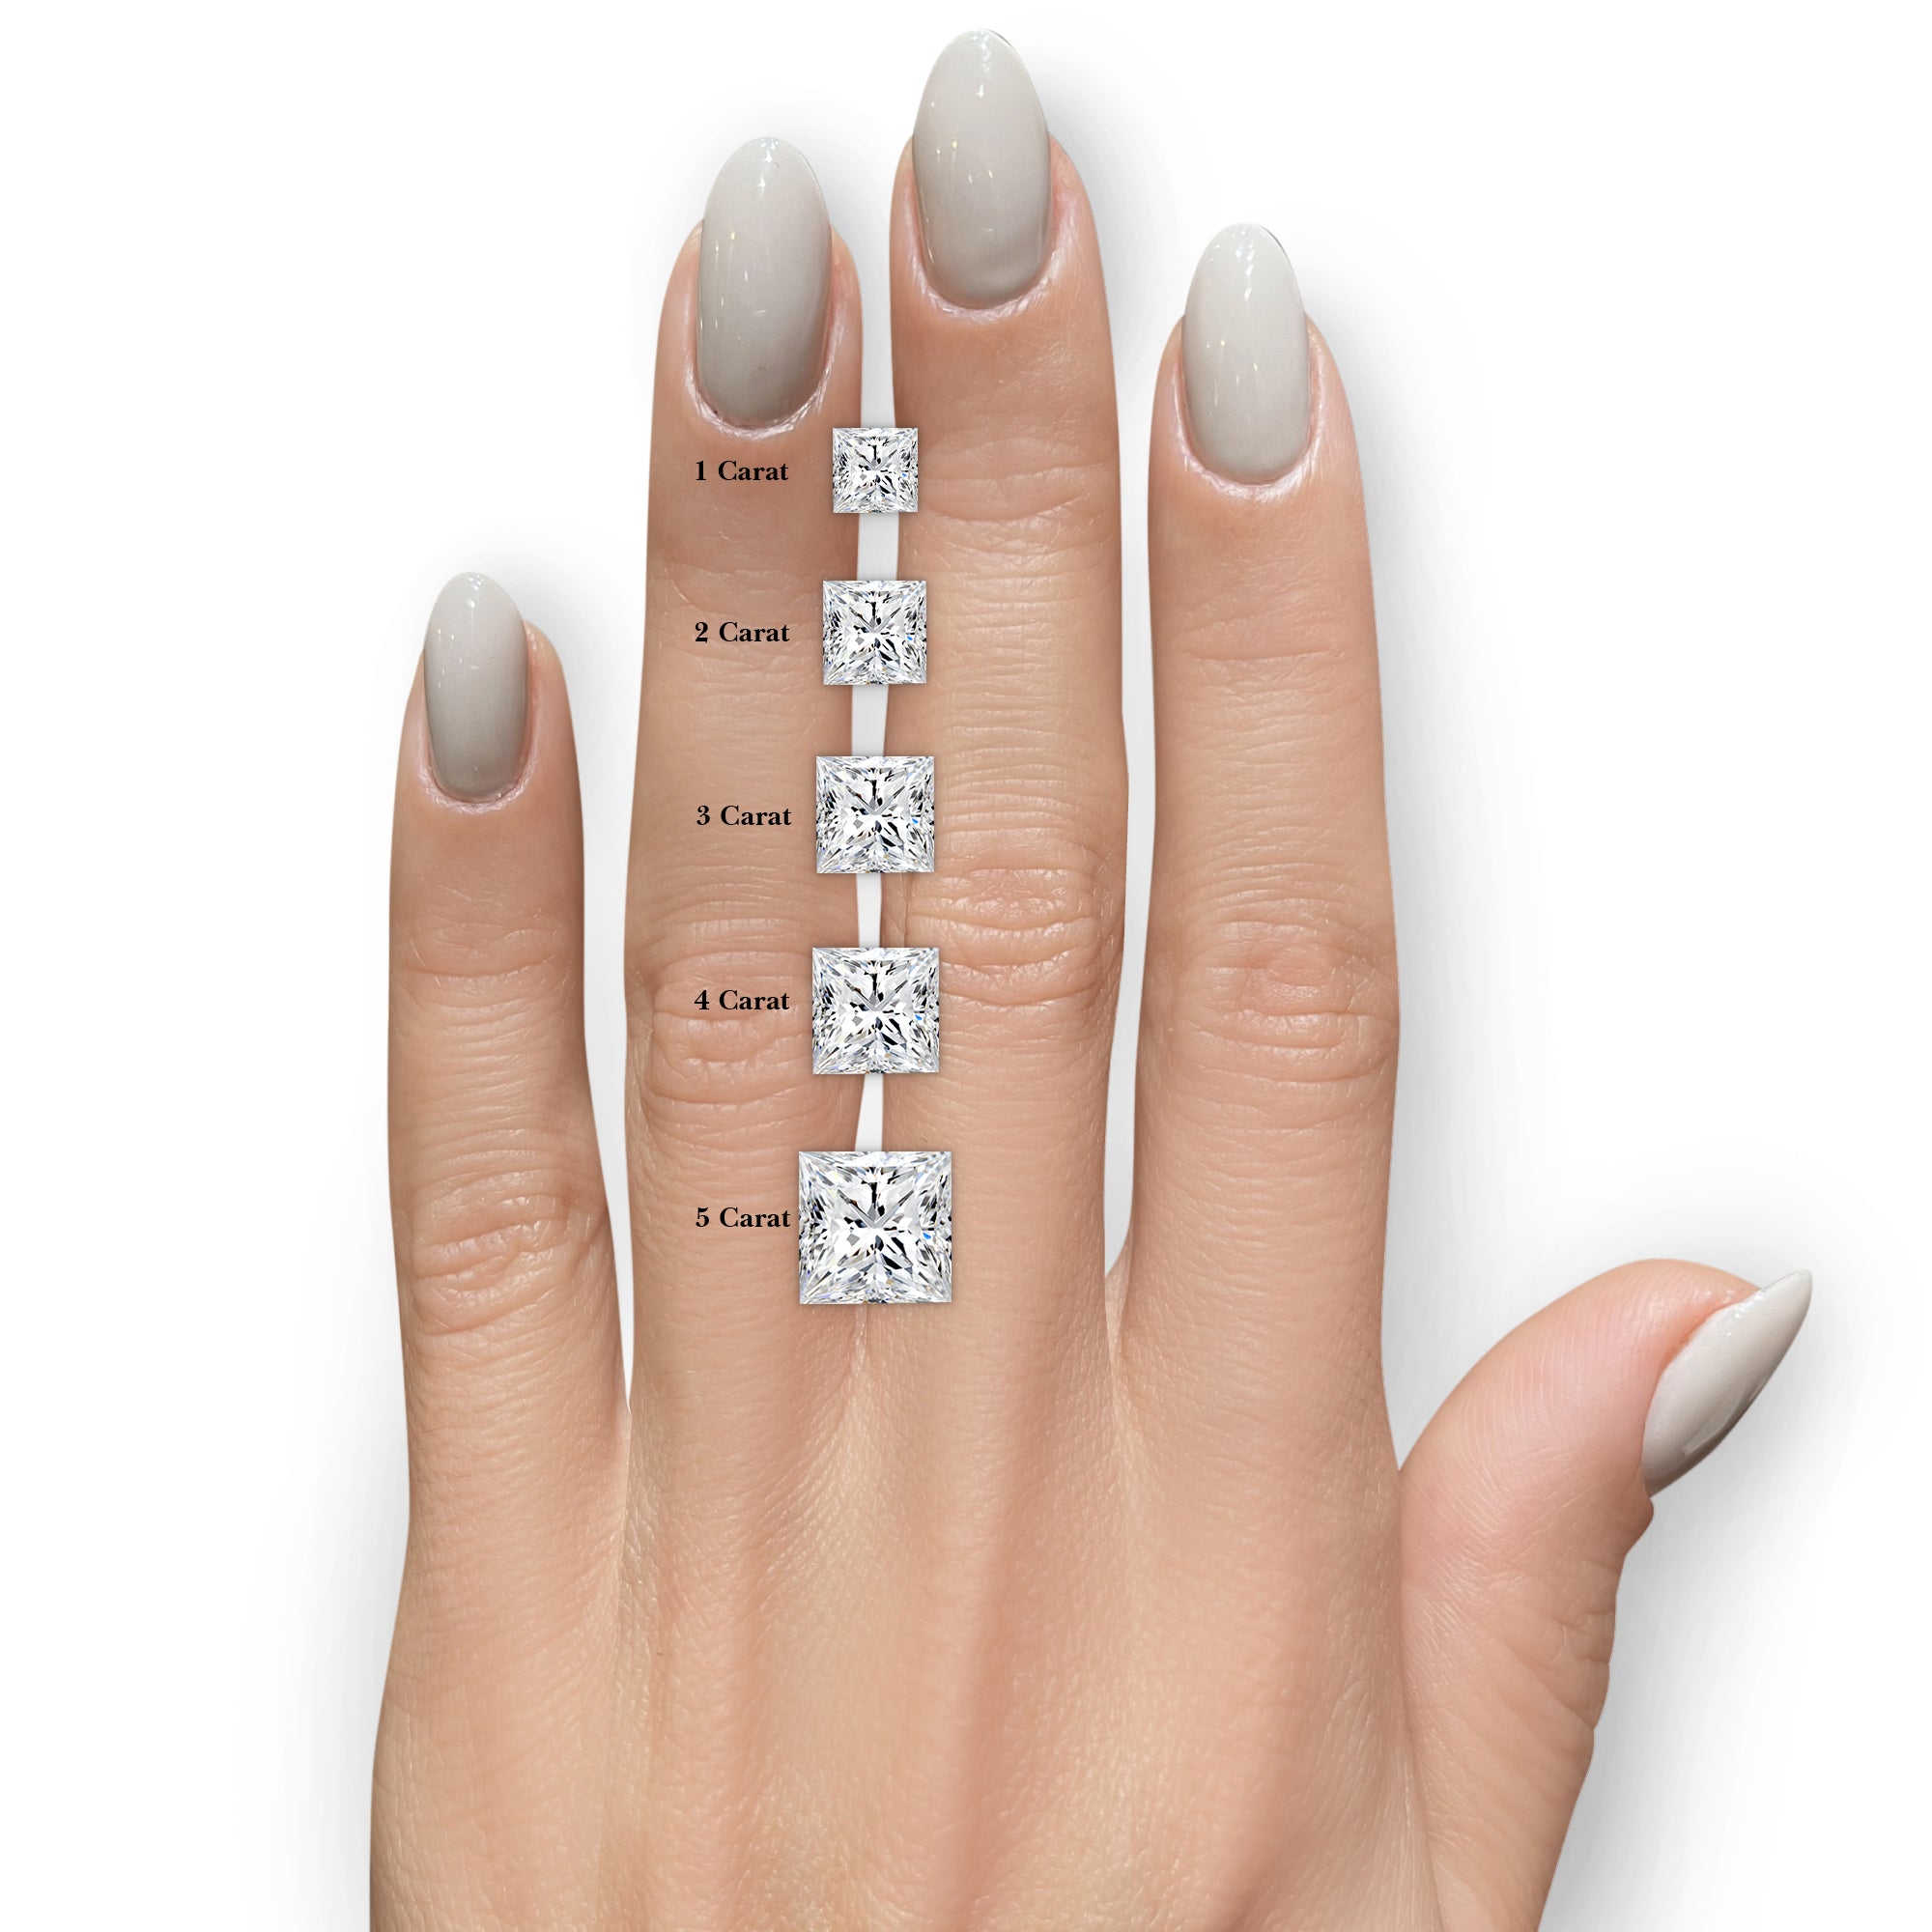 Freya Diamond Engagement Ring -Platinum